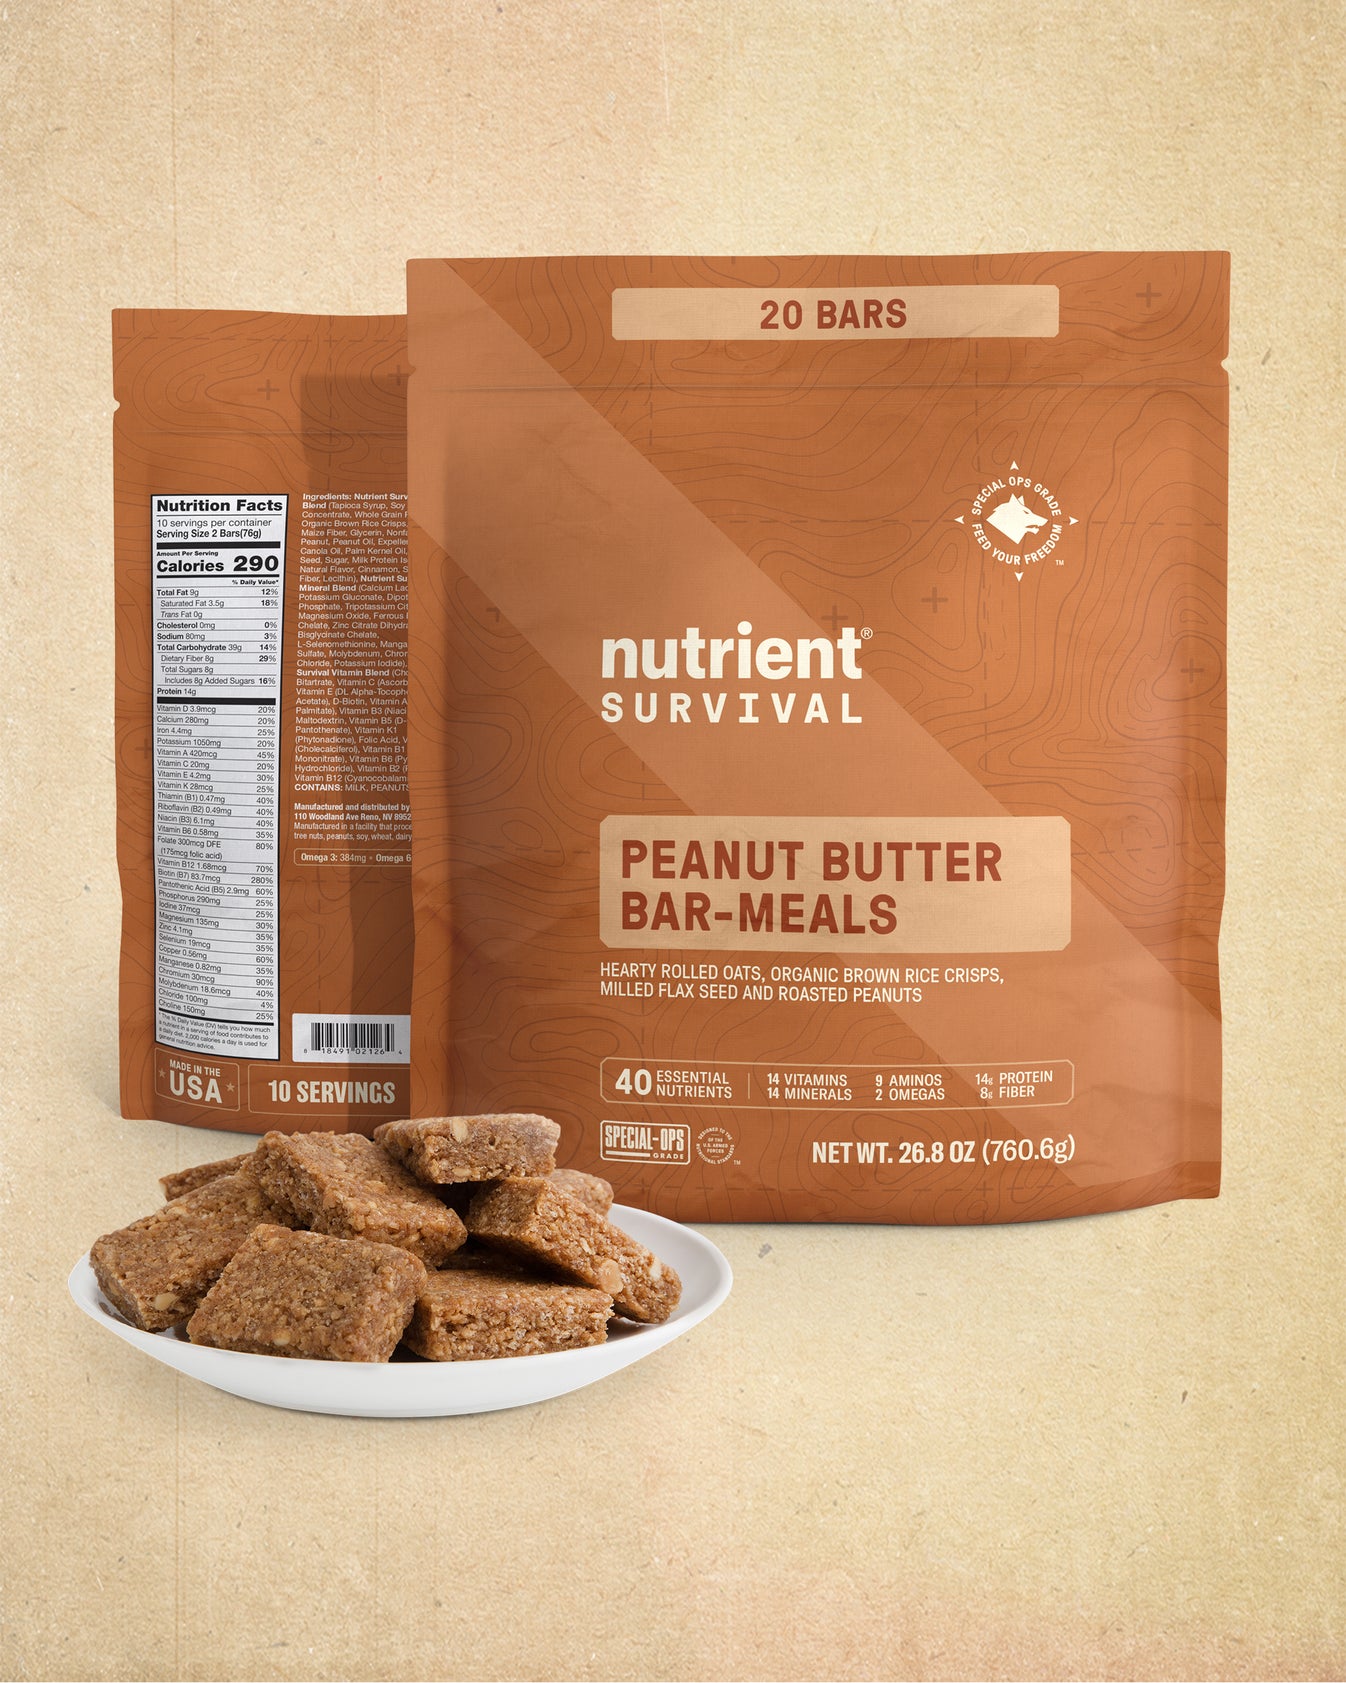 Peanut Butter Bar-Meals Pantry Pack